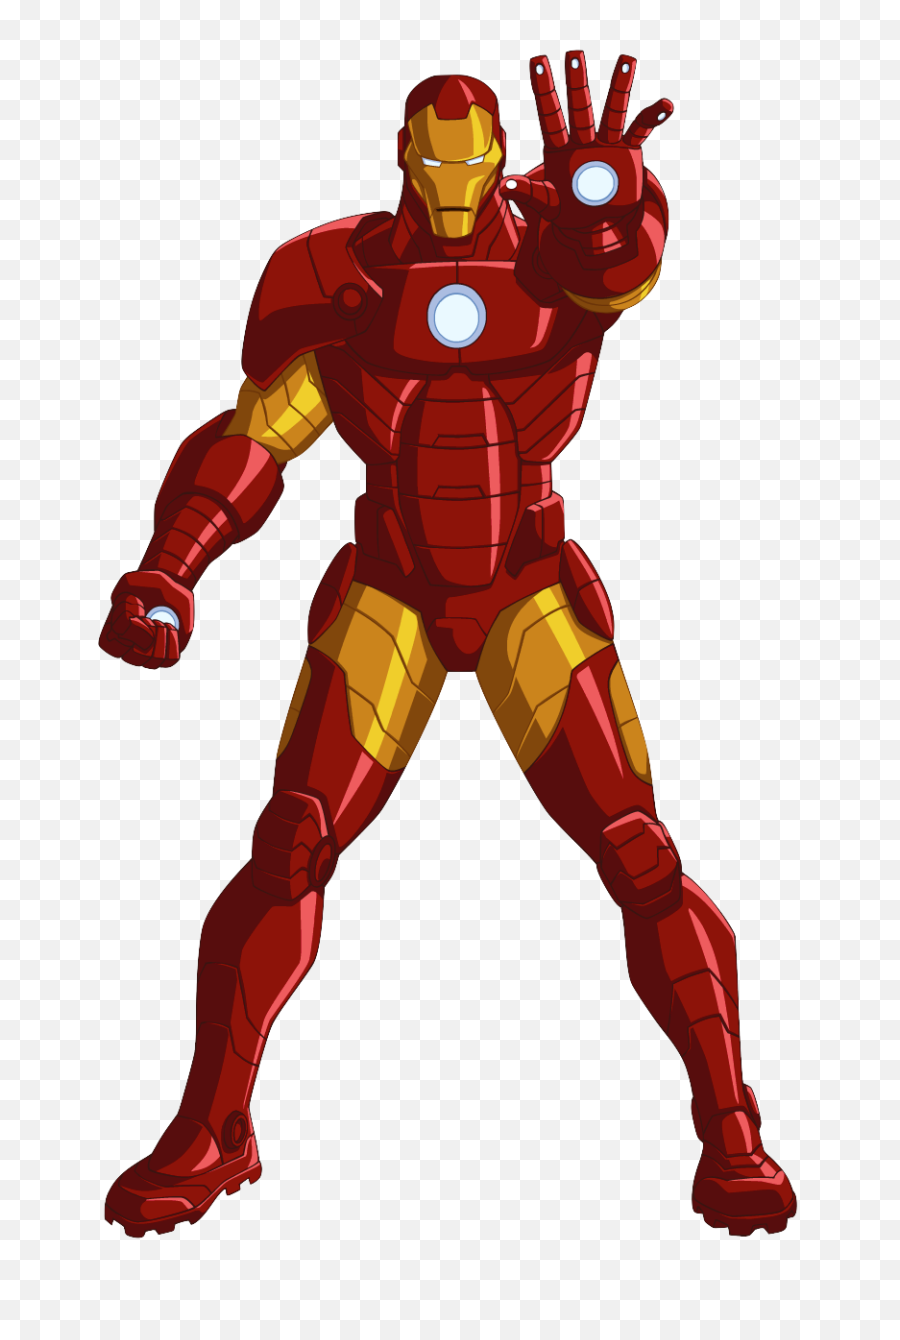 10,314 Logo Iron Man Images, Stock Photos & Vectors | Shutterstock